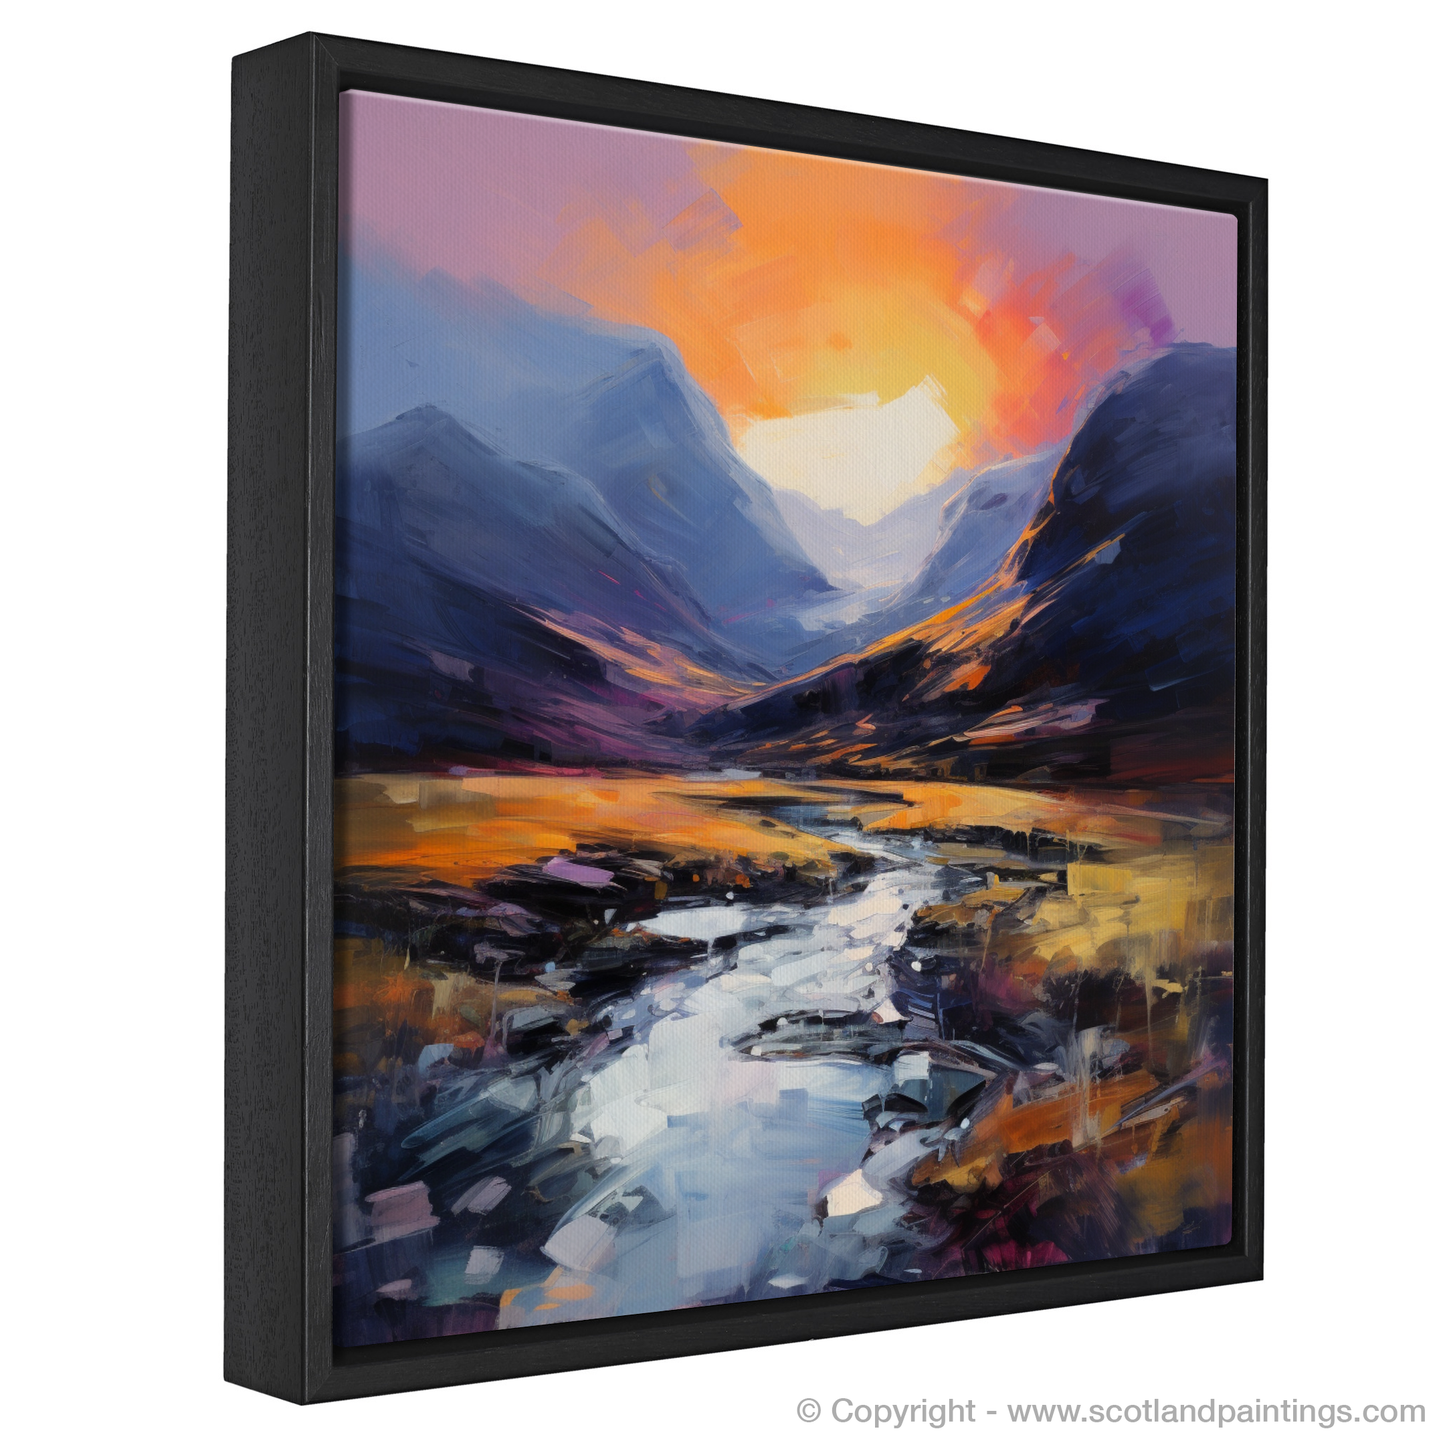 Painting and Art Print of Soft twilight on slopes in Glencoe entitled "Twilight Serenade on Glencoe Slopes".